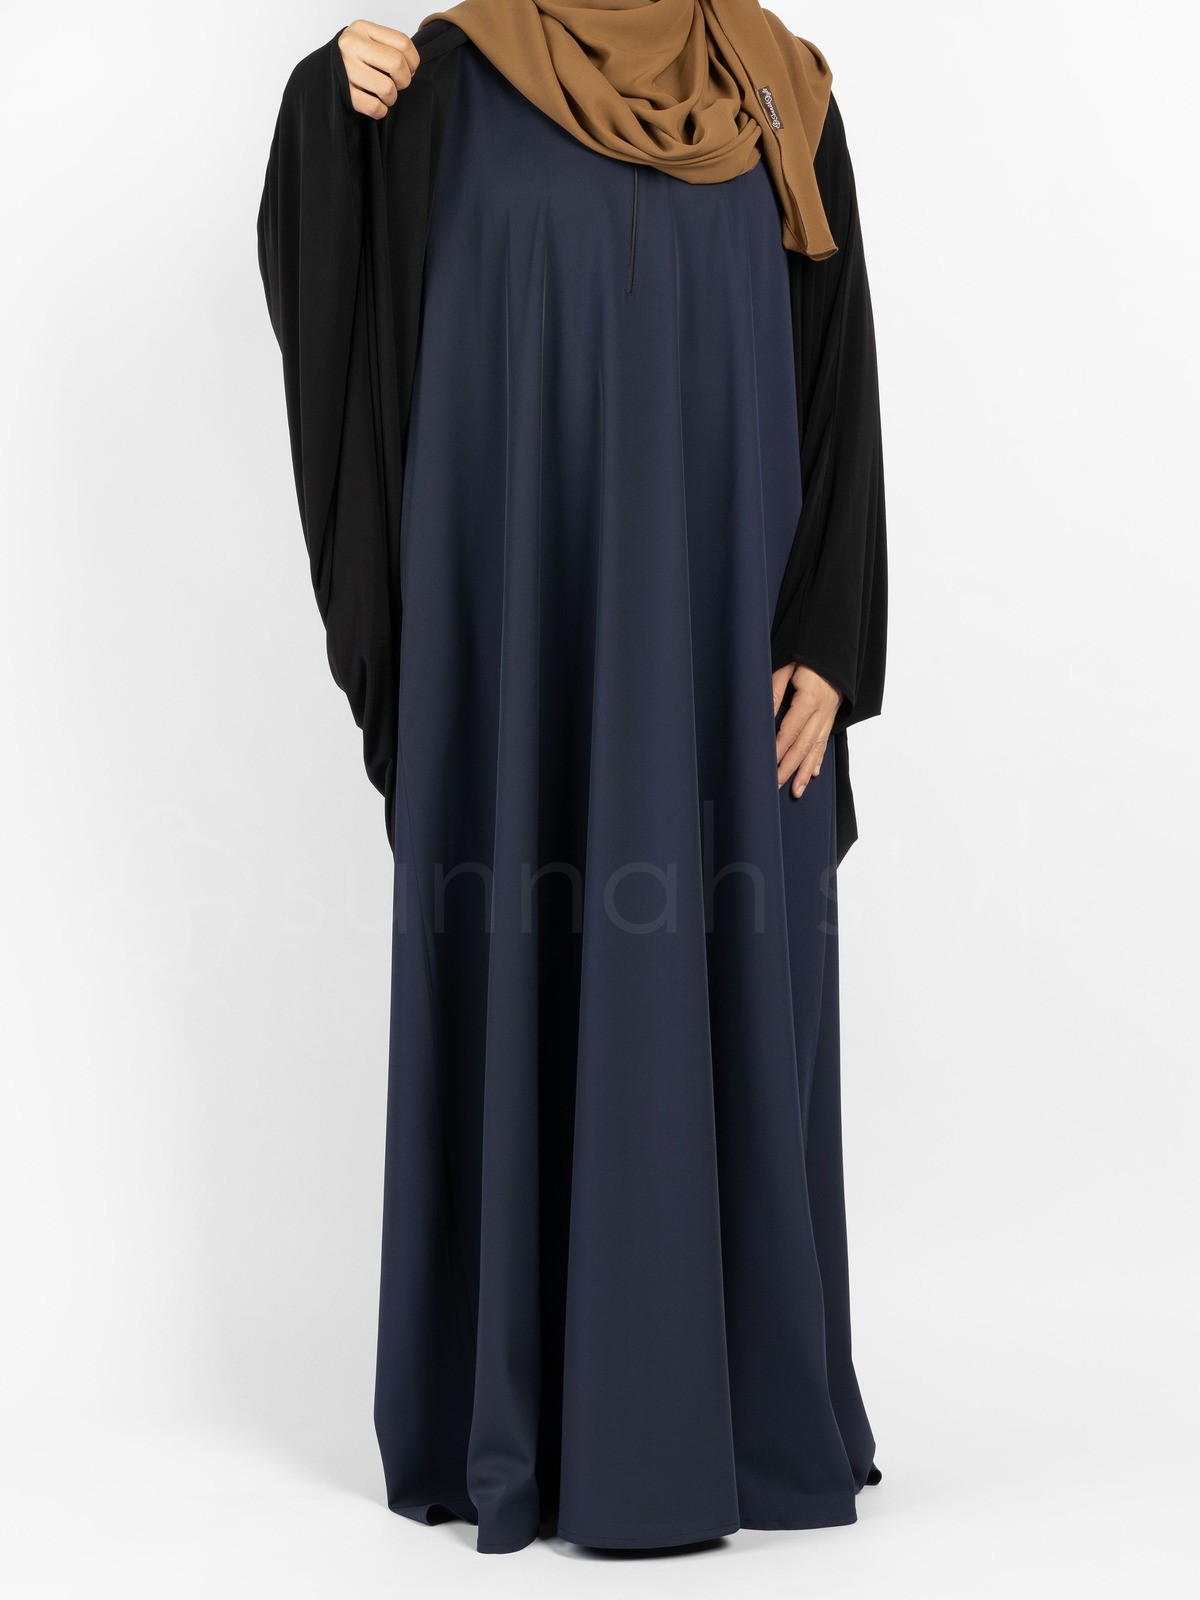 Sunnah Style - Essentials Sleeveless Abaya (Navy Blue)